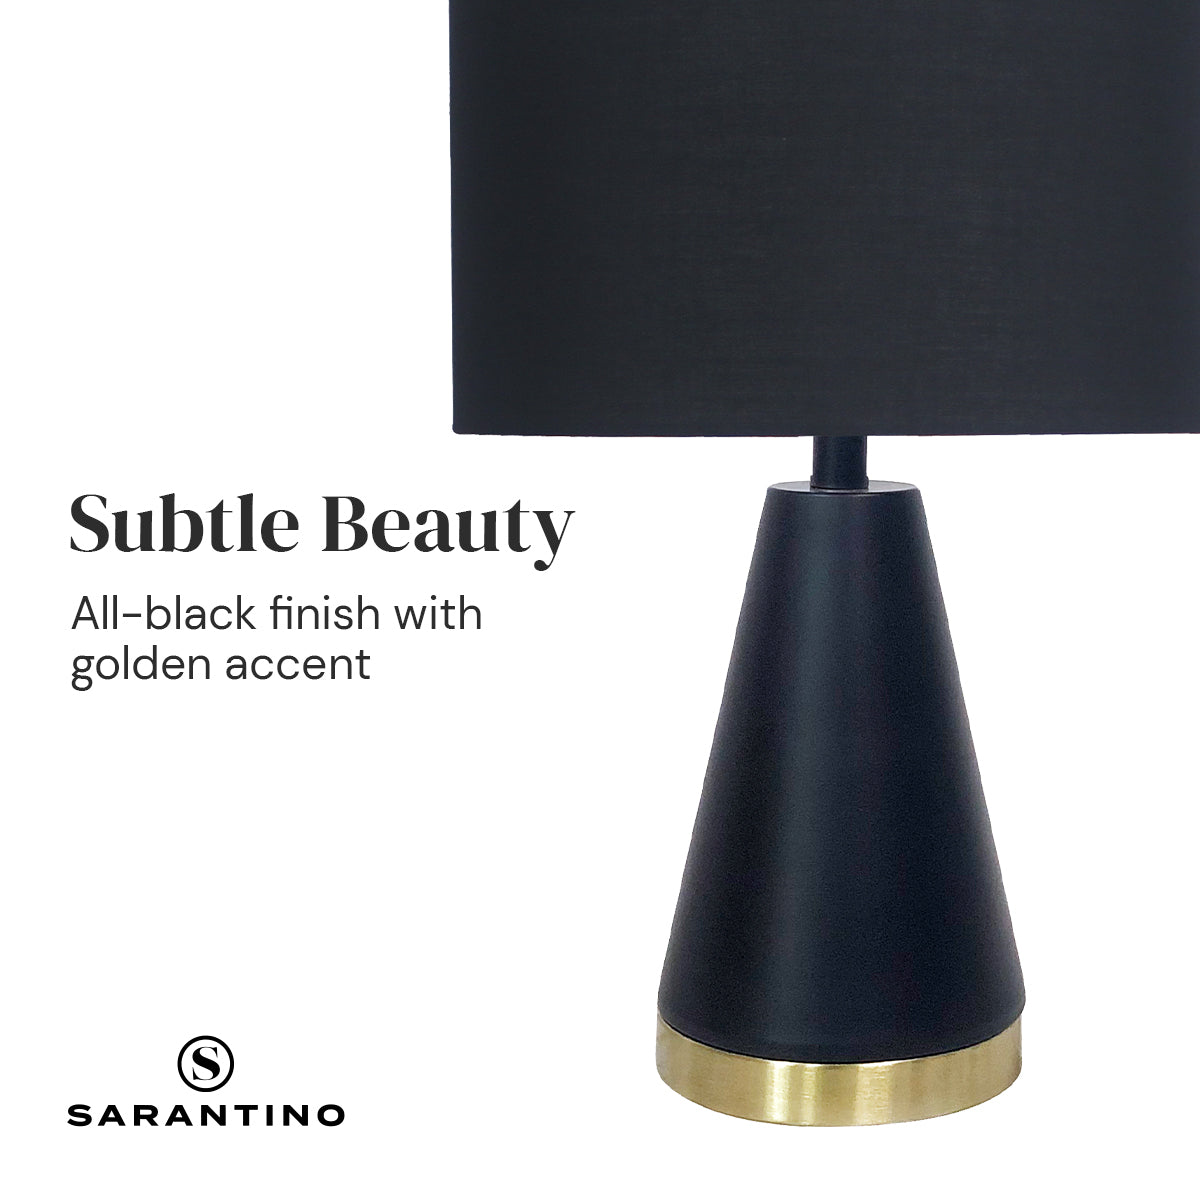 Sarantino Metal Table Lamp in Black and Gold - 0